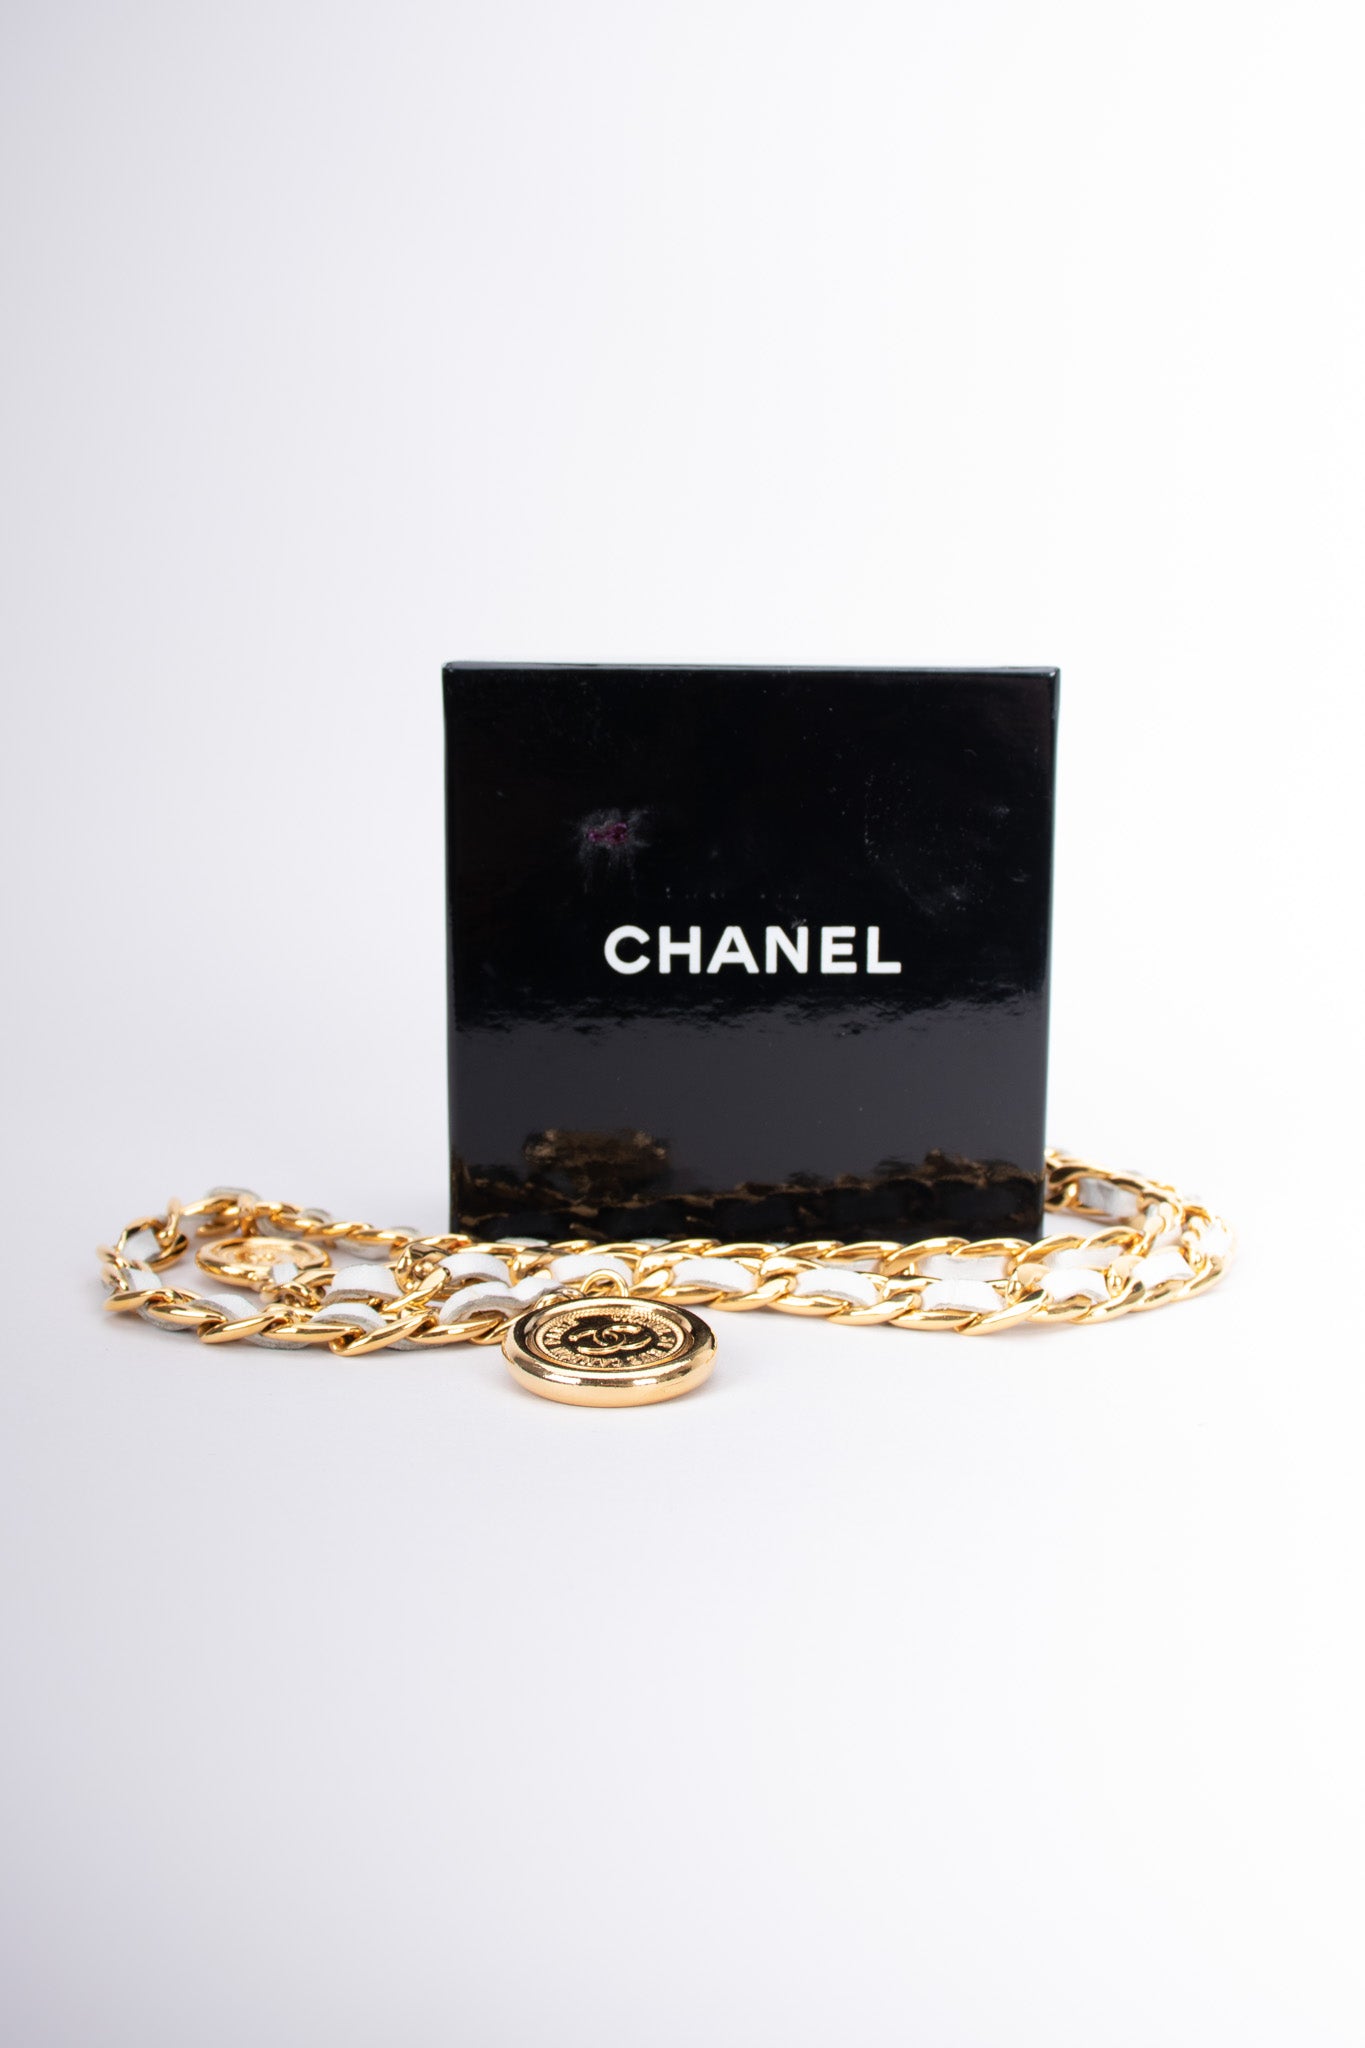 Chanel White Woven Leather Chain Belt Cardi B Linda Evangelista